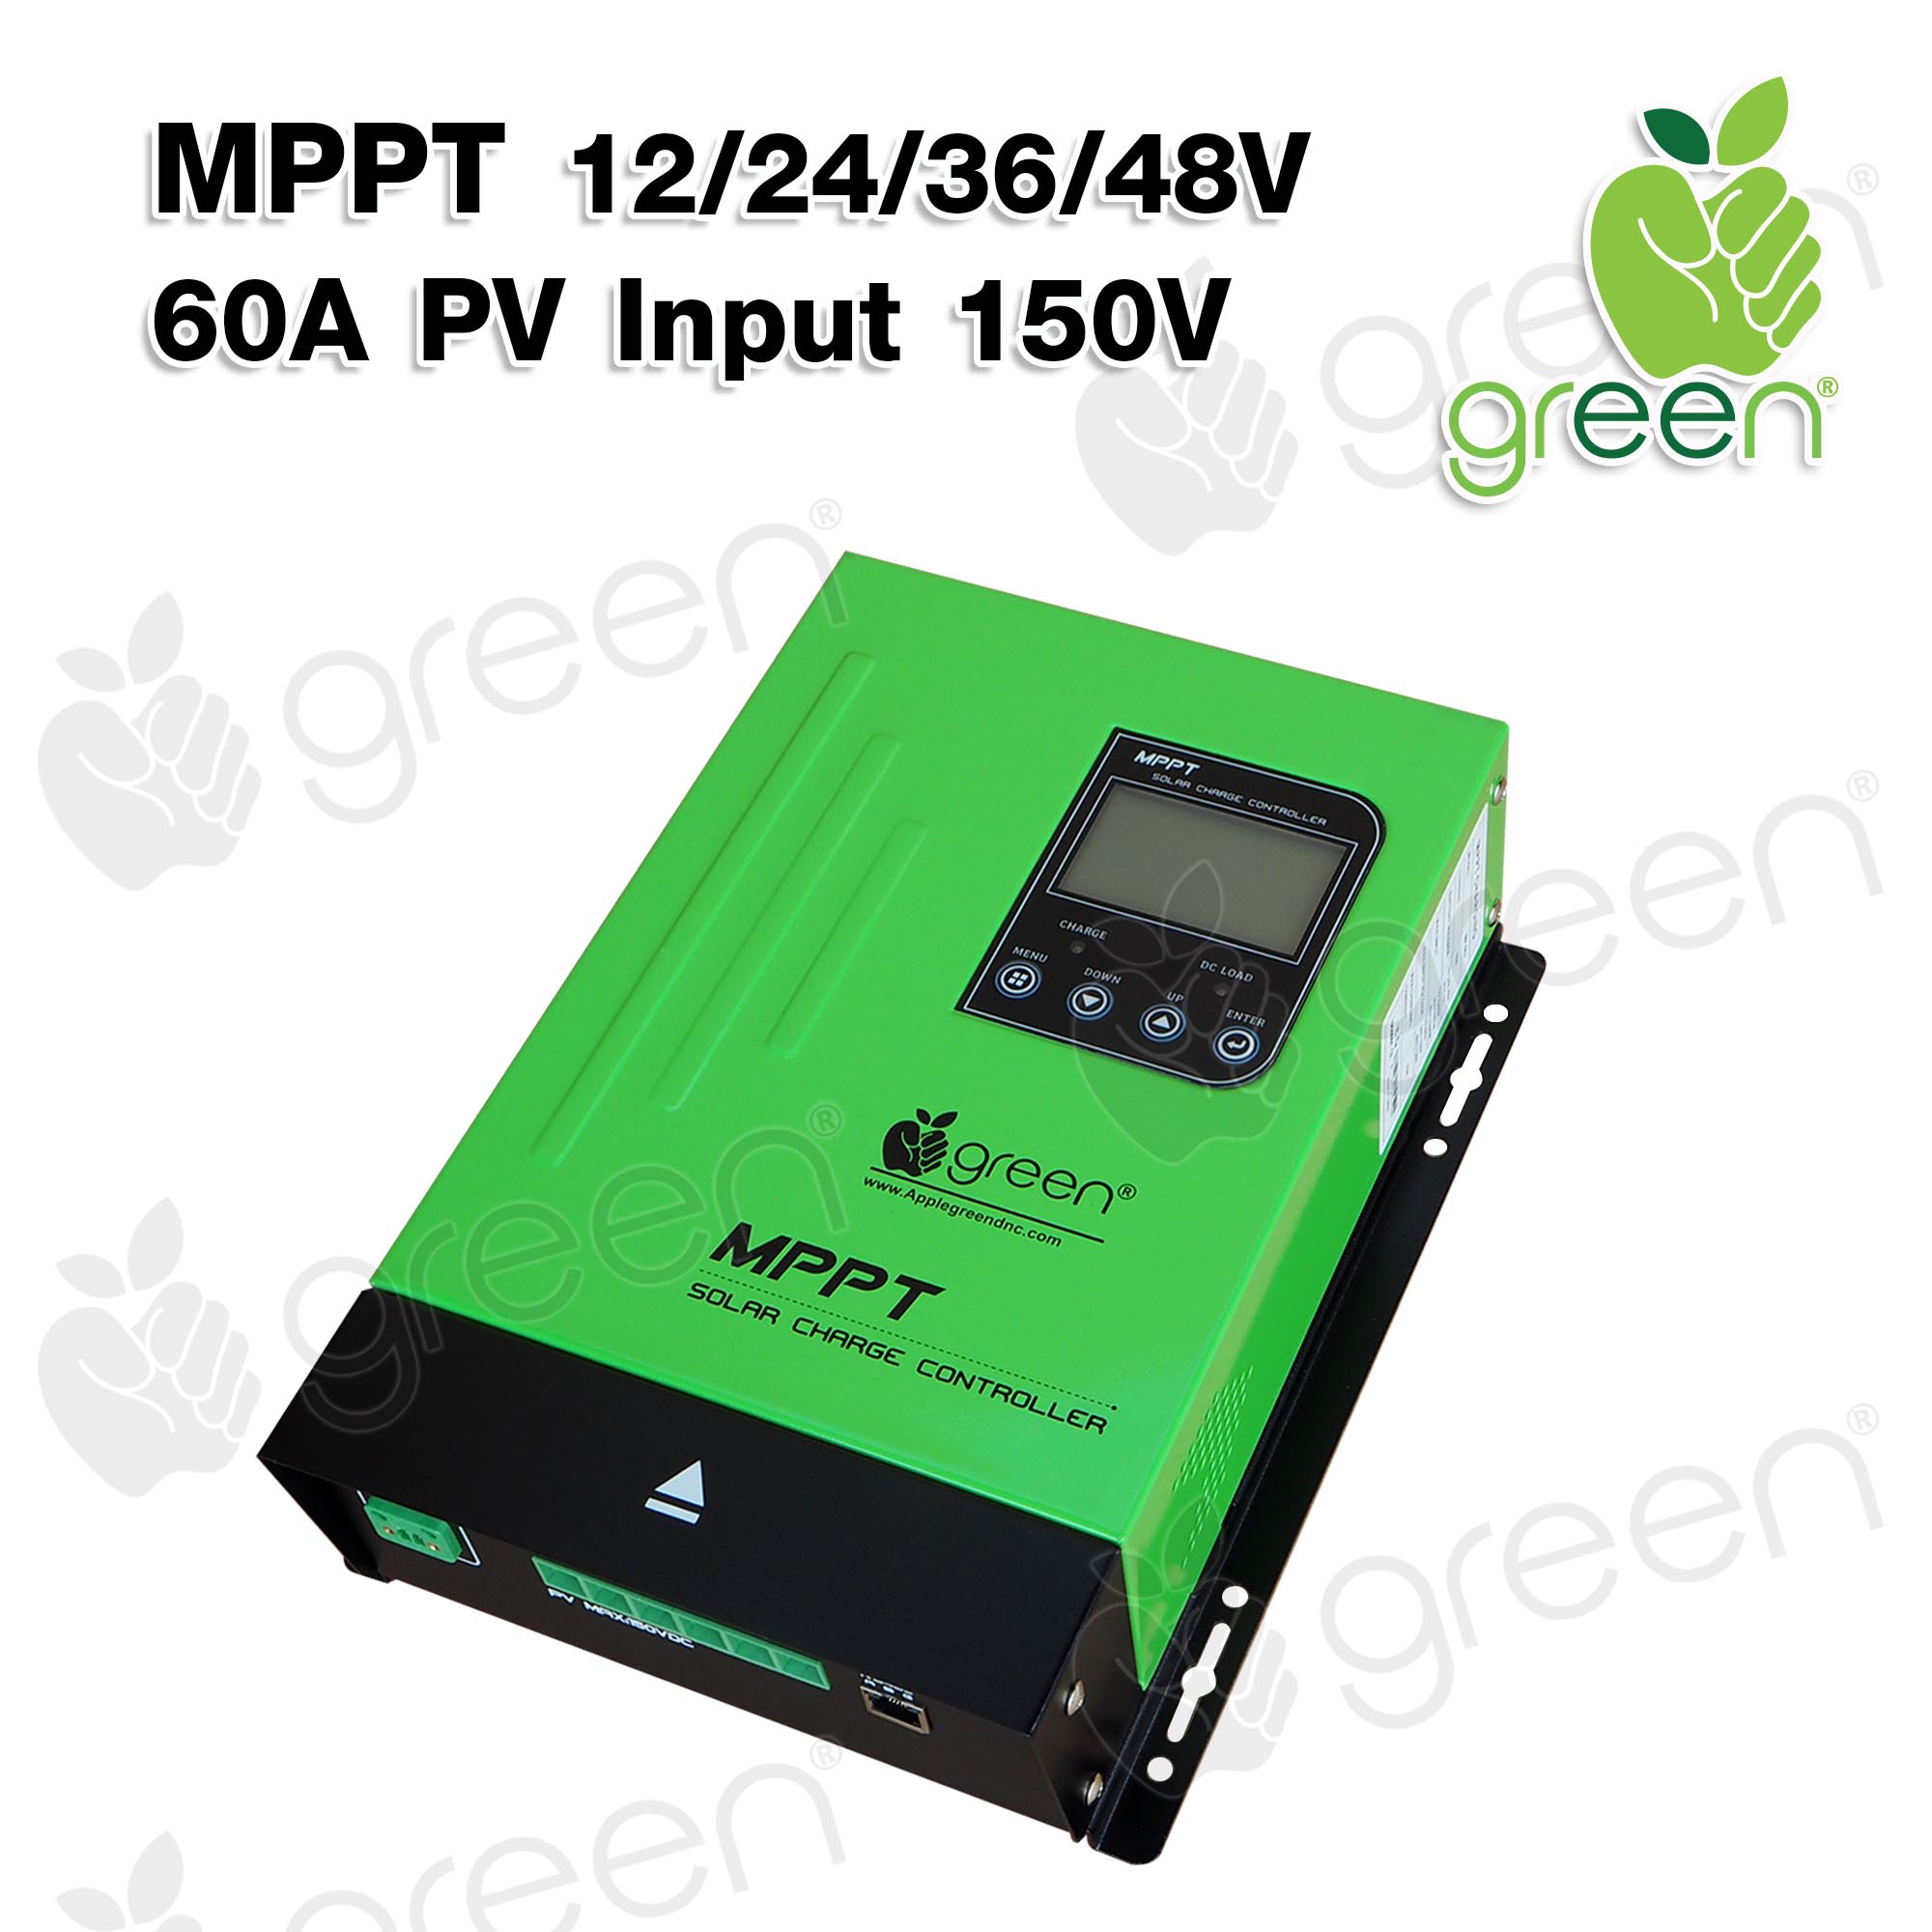 Applegreen MPPT Solar Control charger 12V-48V 60A Auto detection Efficiency 99% ใช้กับระบบโซล่าเซลล์ แบตเตอรี่ อินเวอร์เตอร์ พลังงานแสงอาทิตย์